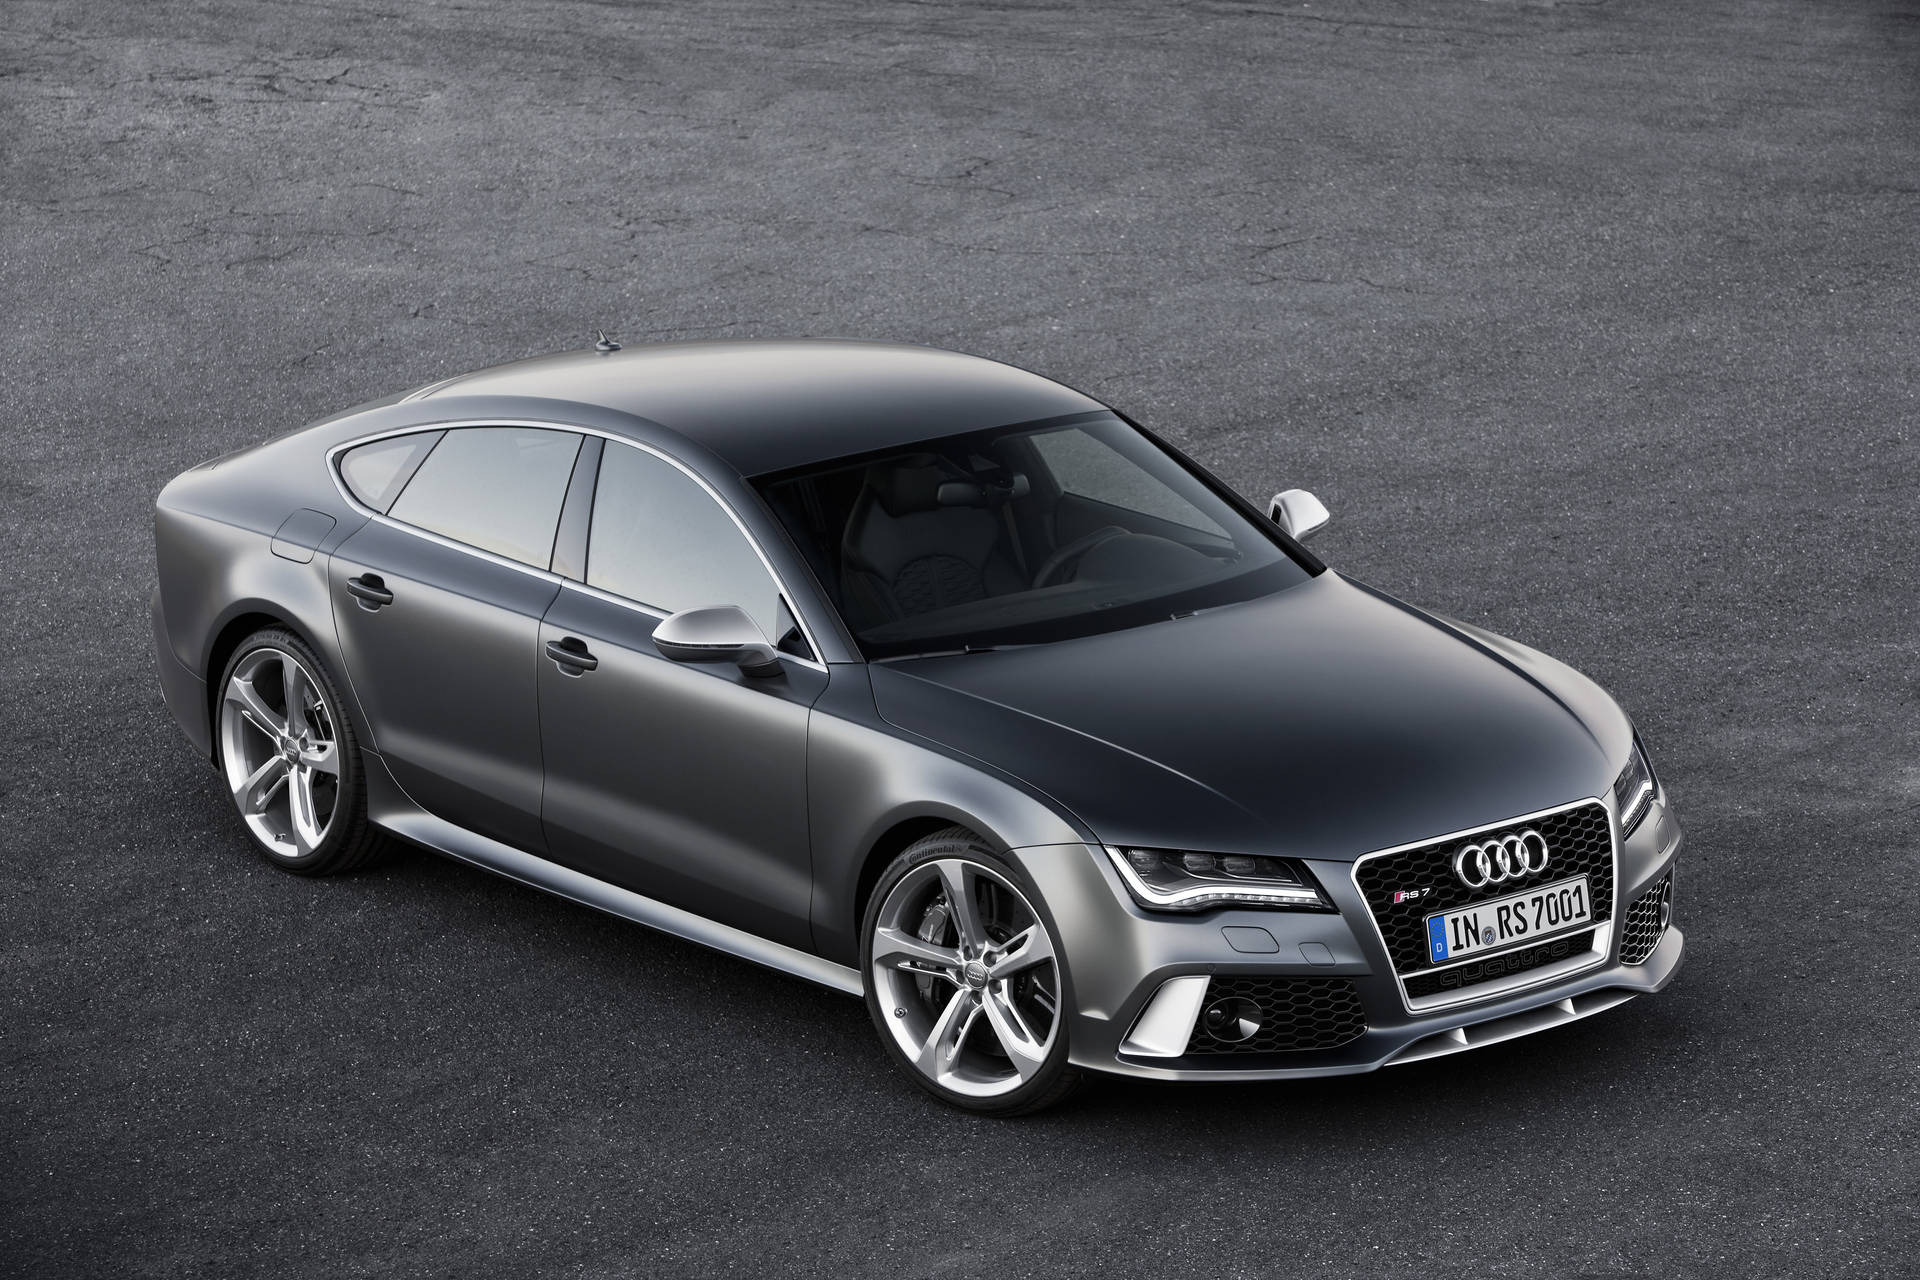 Audi Rs7 Black Side Angle Background